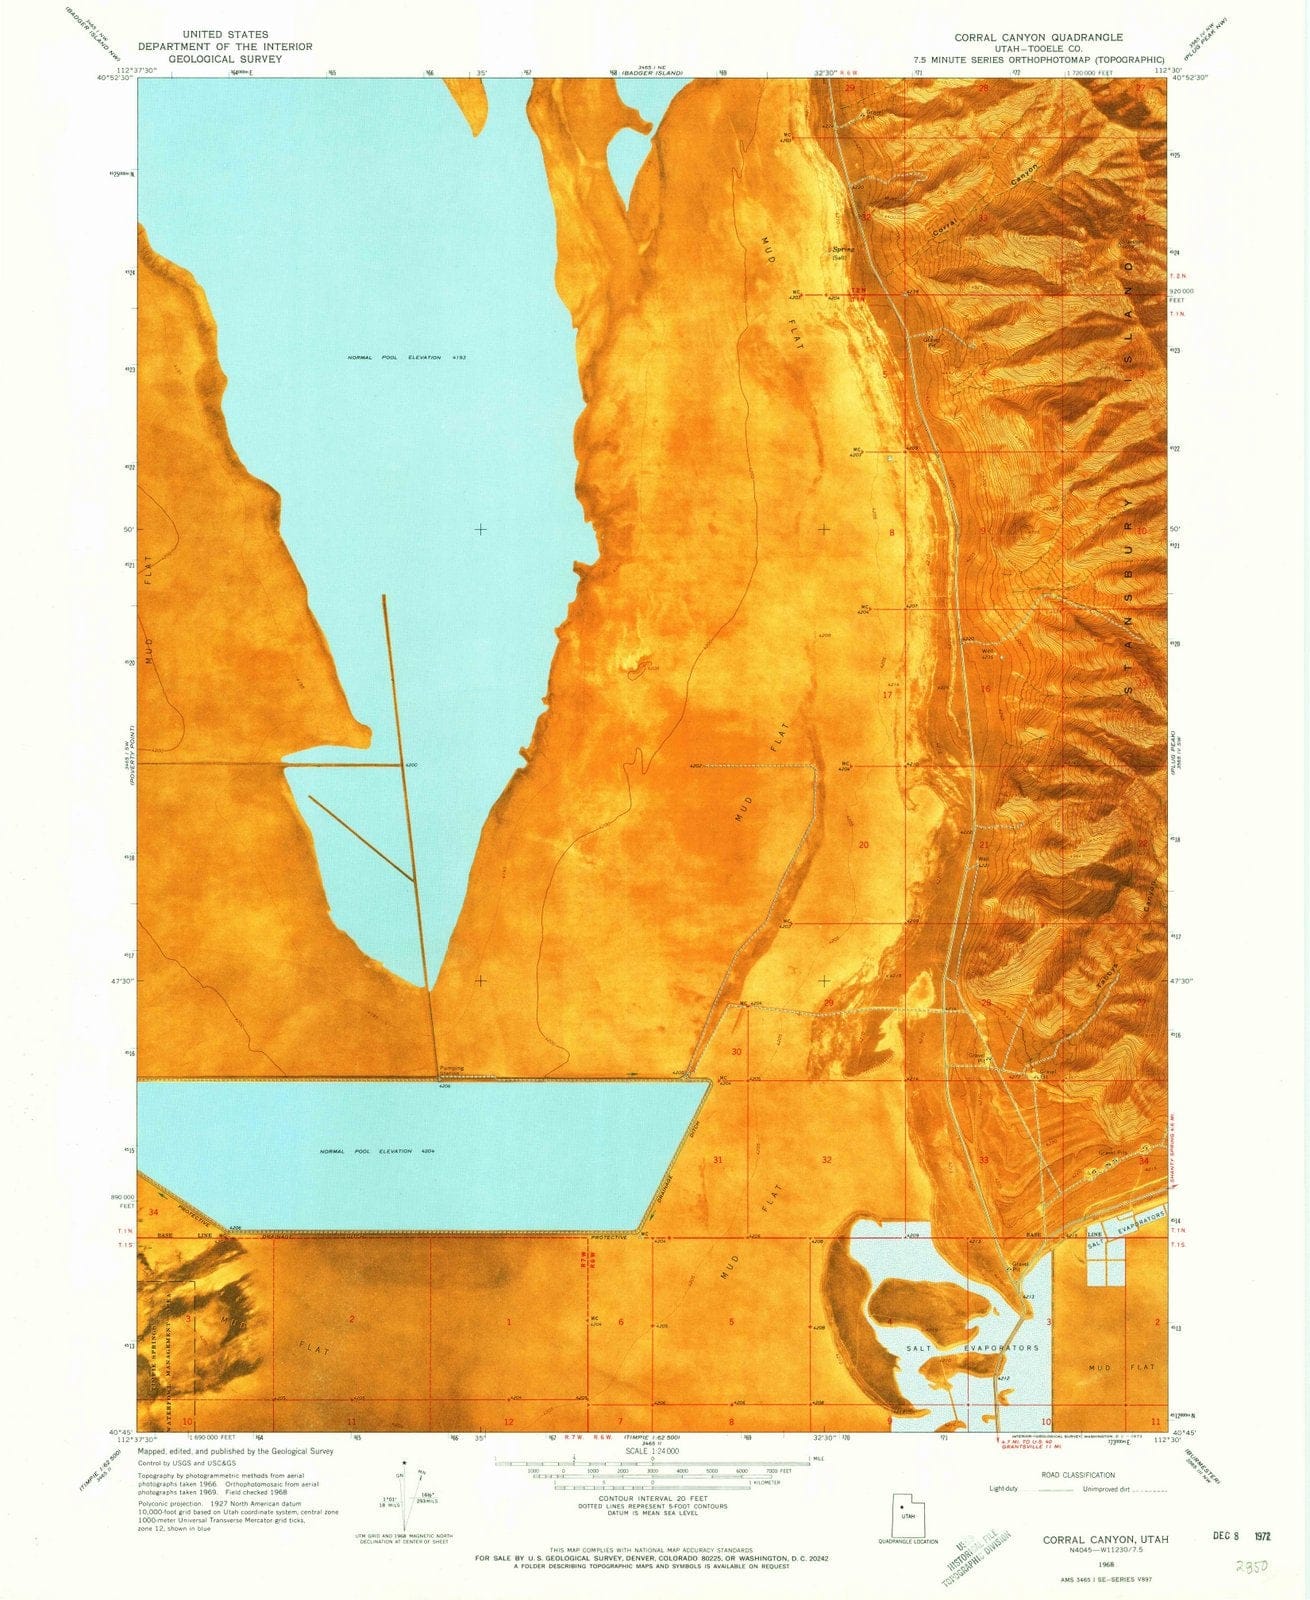 1968 Corral Canyon, UT - Utah - USGS Topographic Map